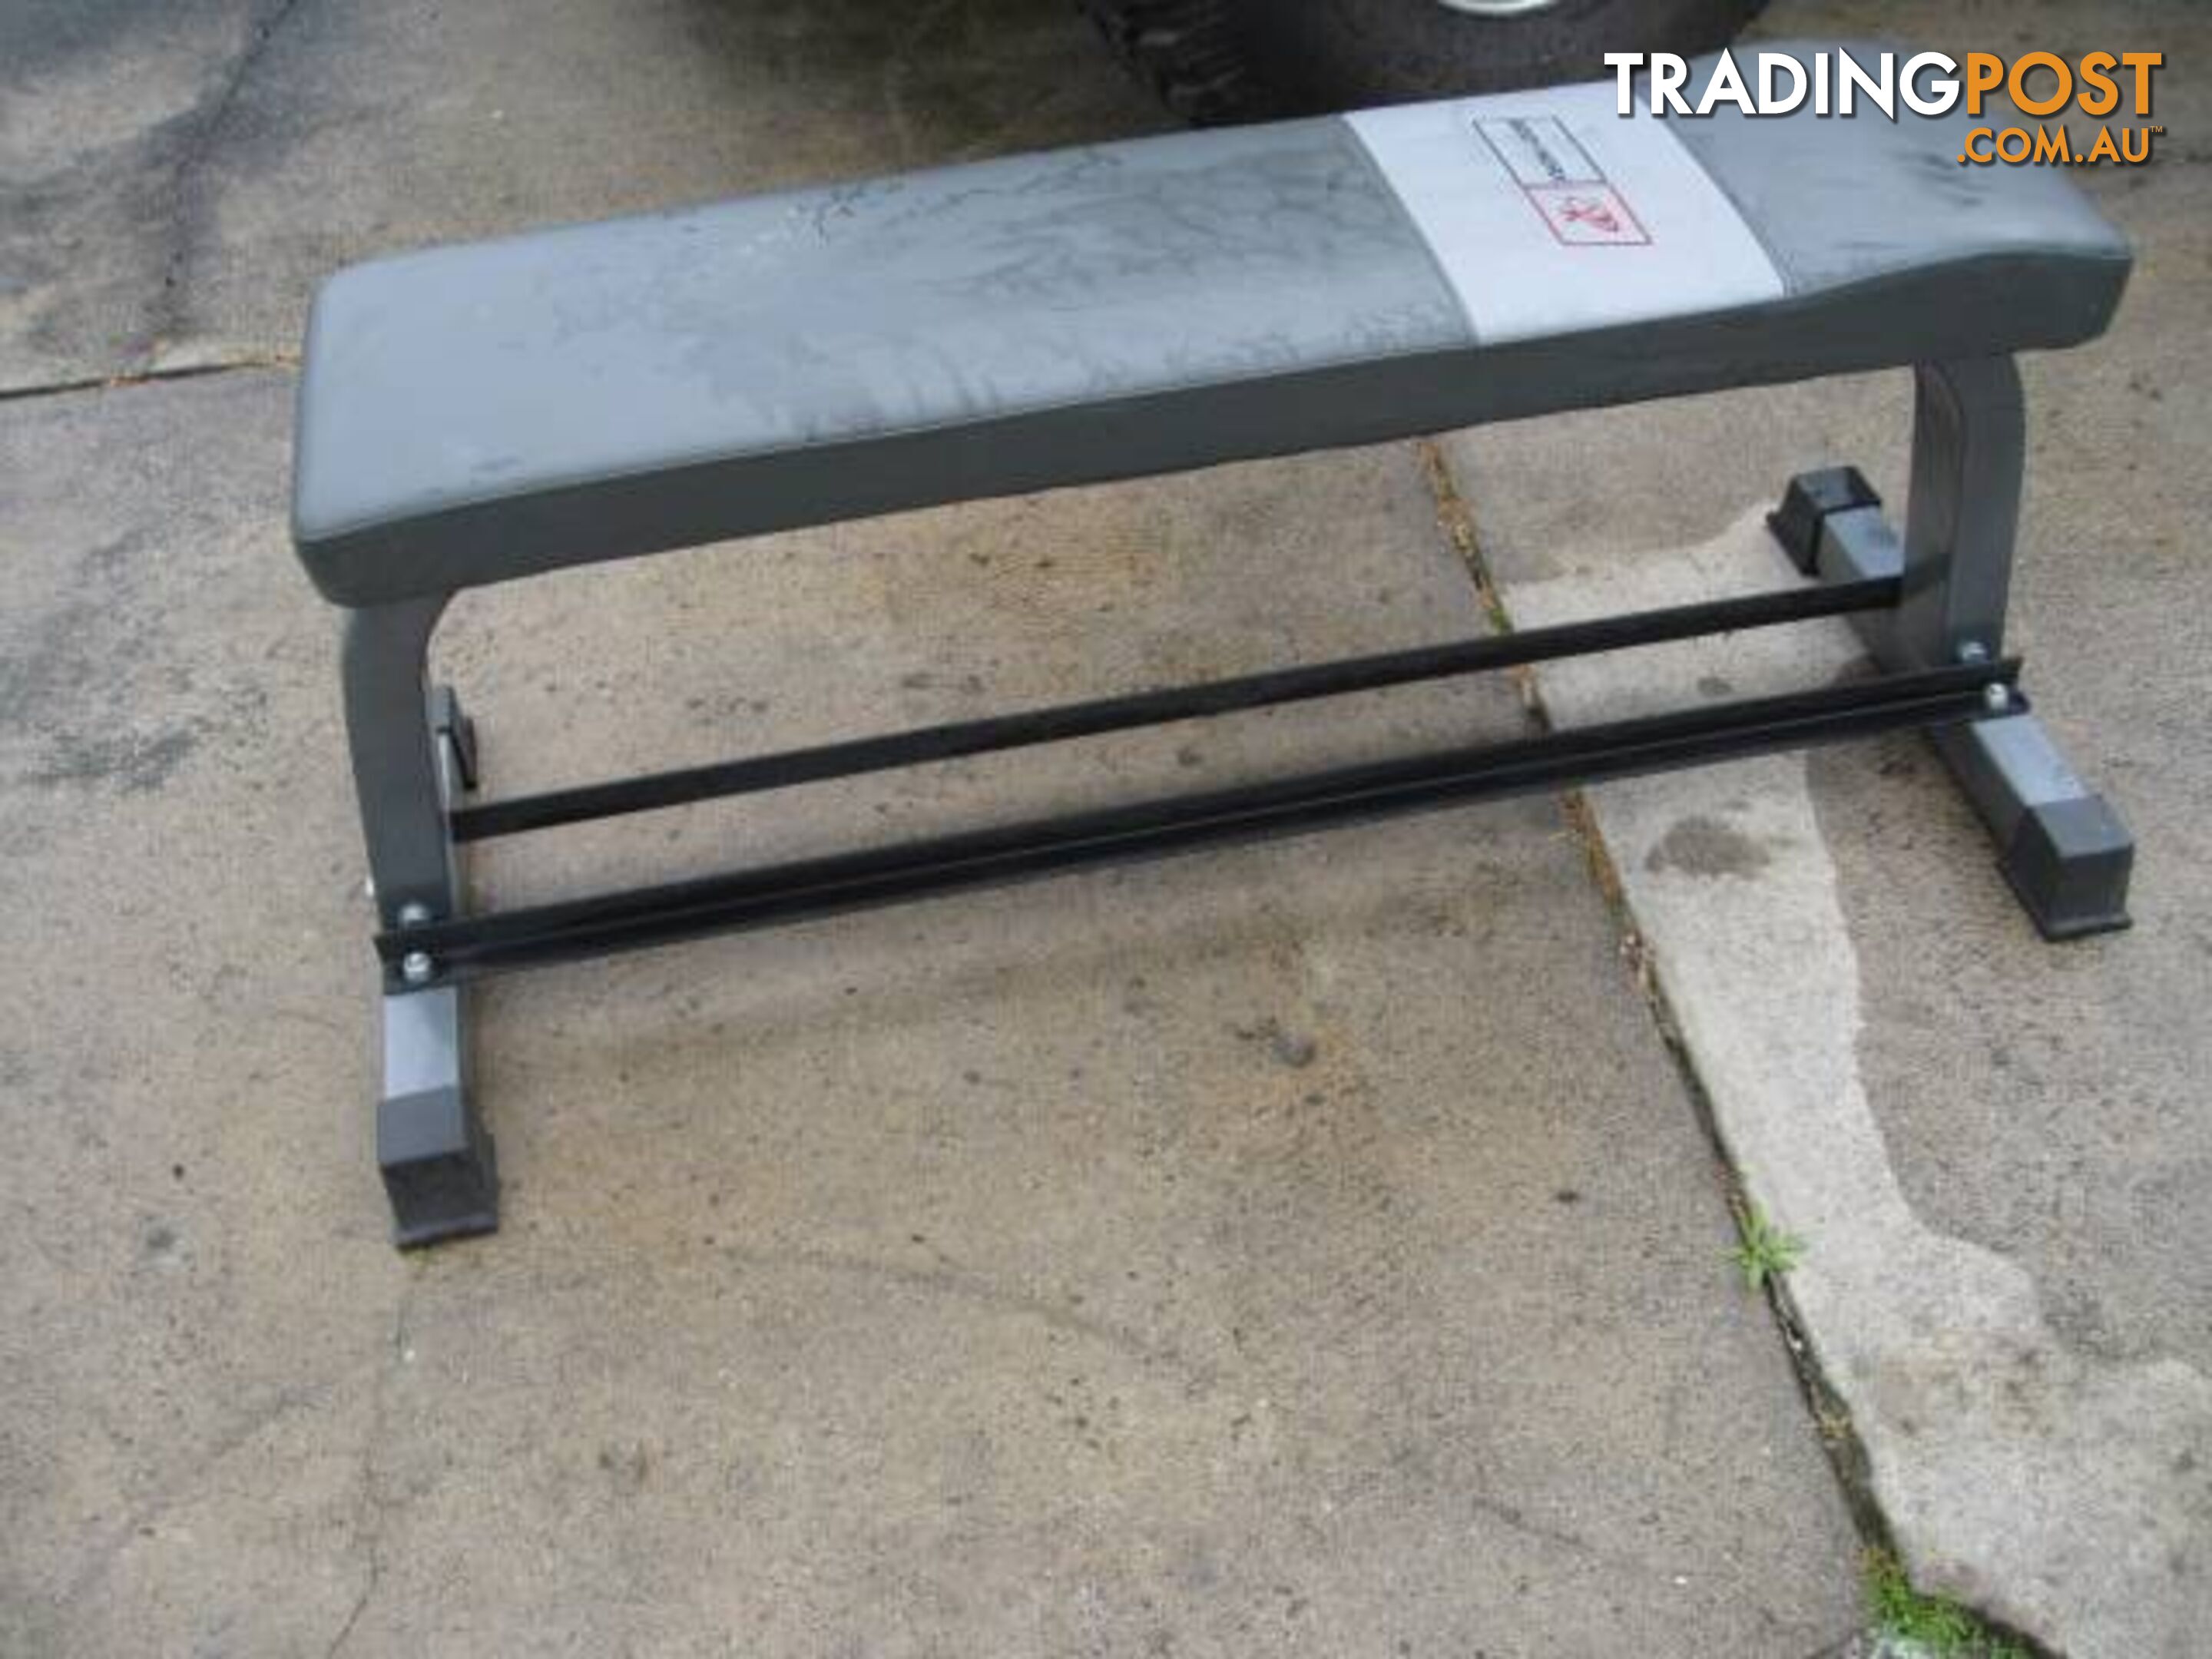 Bodyworx Flat Bench with Dumbbell Rack